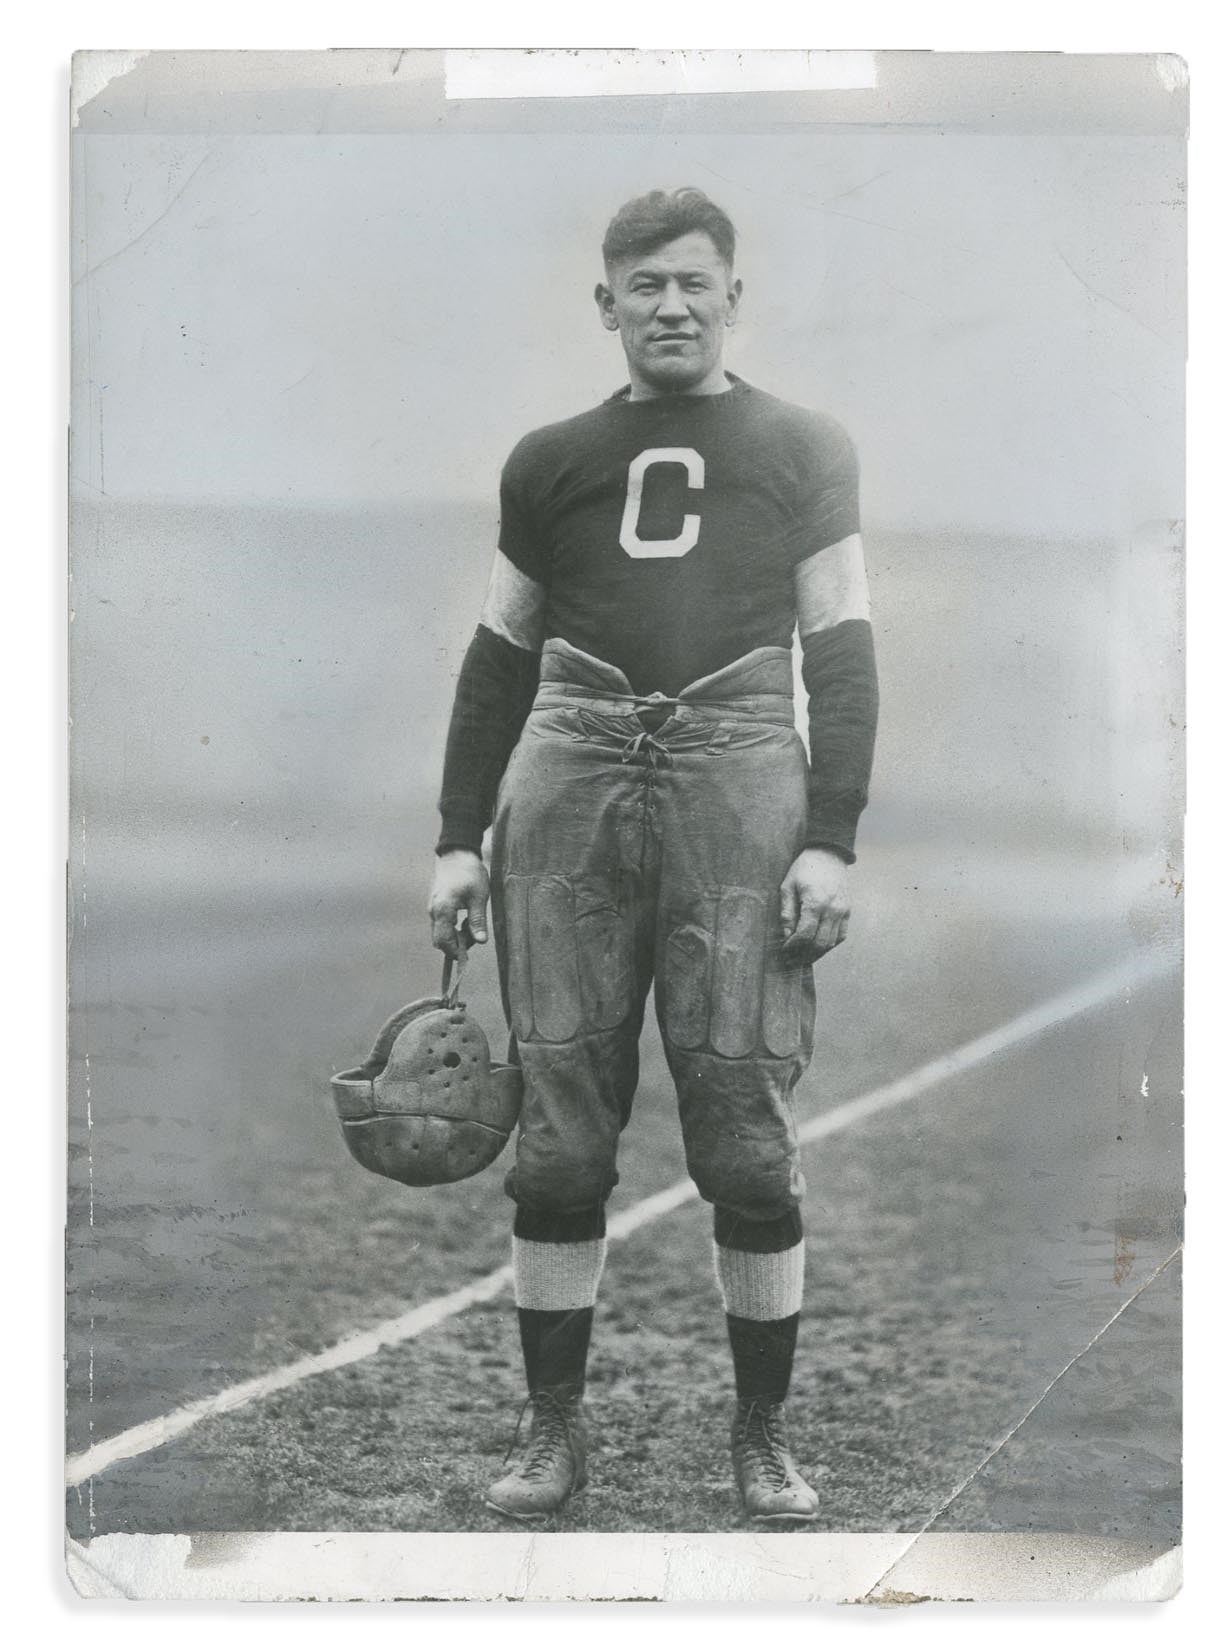 Vintage Sports Photographs - Classic Jim Thorpe Canton Bulldogs Photo Type 1